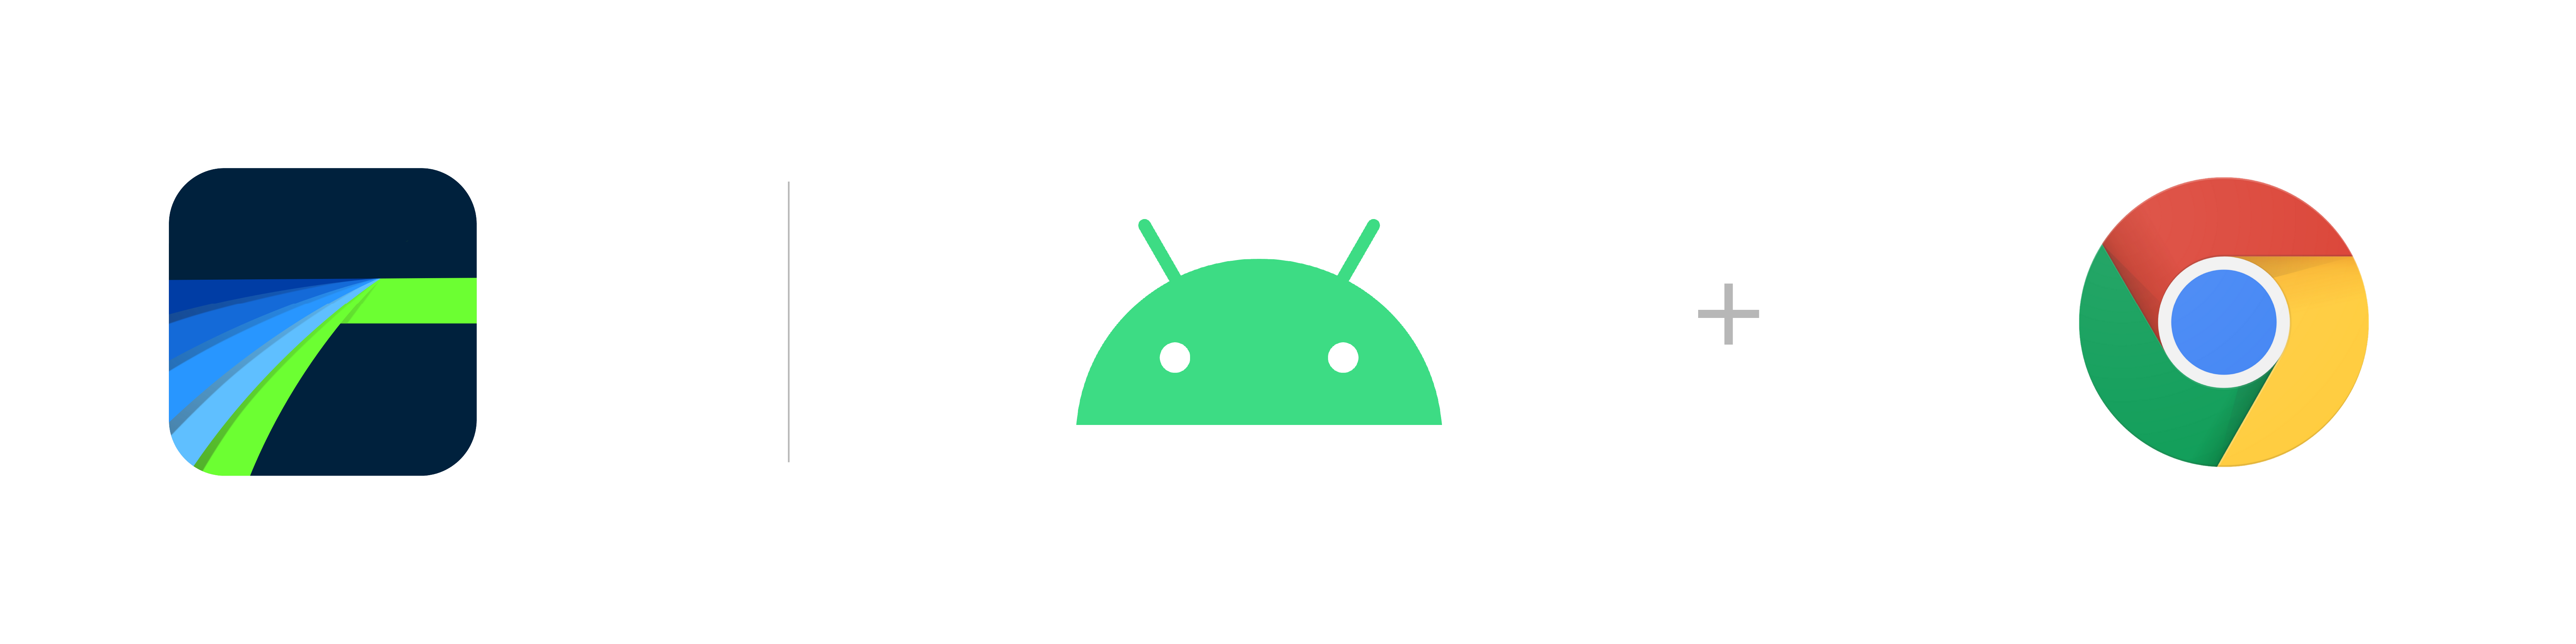 LumaFusion on Android and ChromeOS